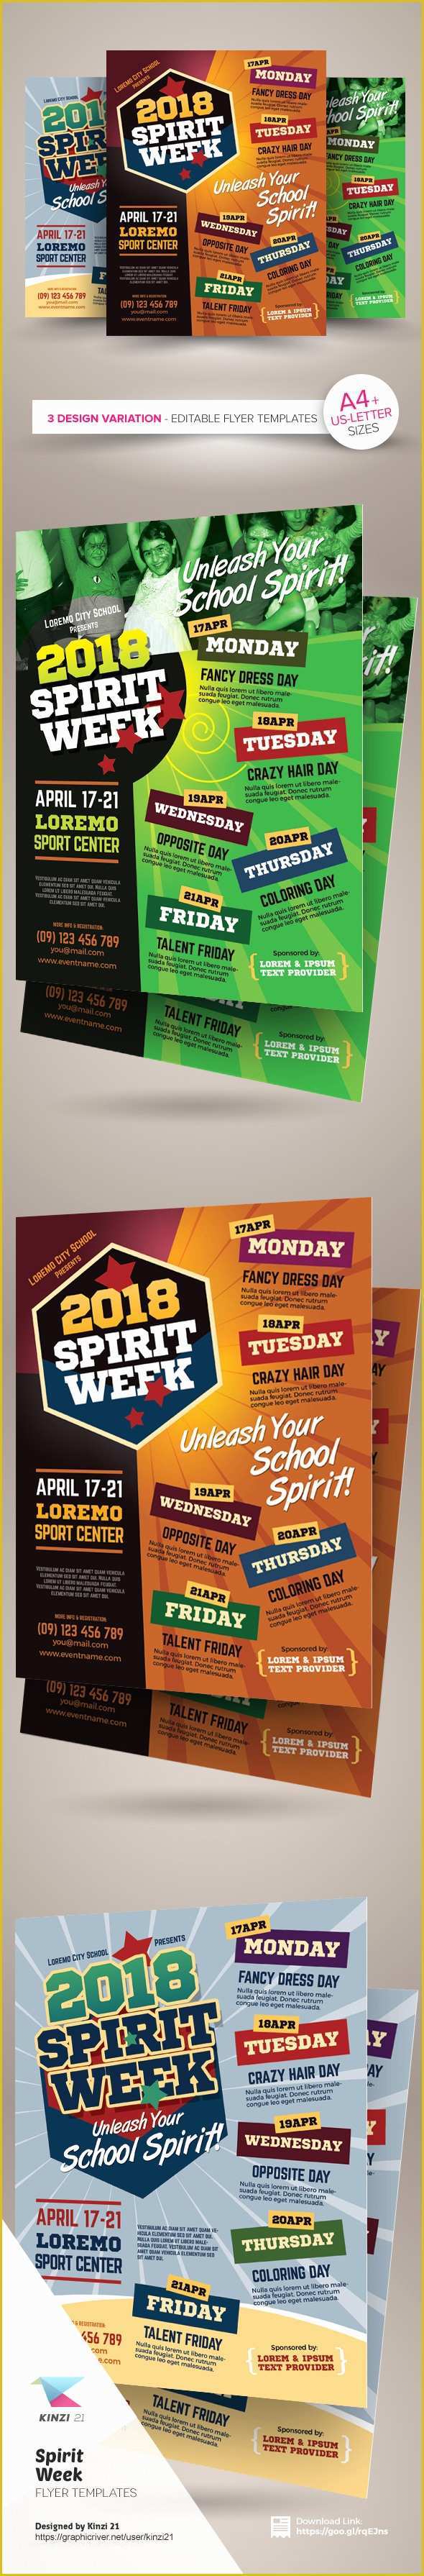 Free Spirit Week Flyer Template Of Spirit Week Flyer Templates On Behance